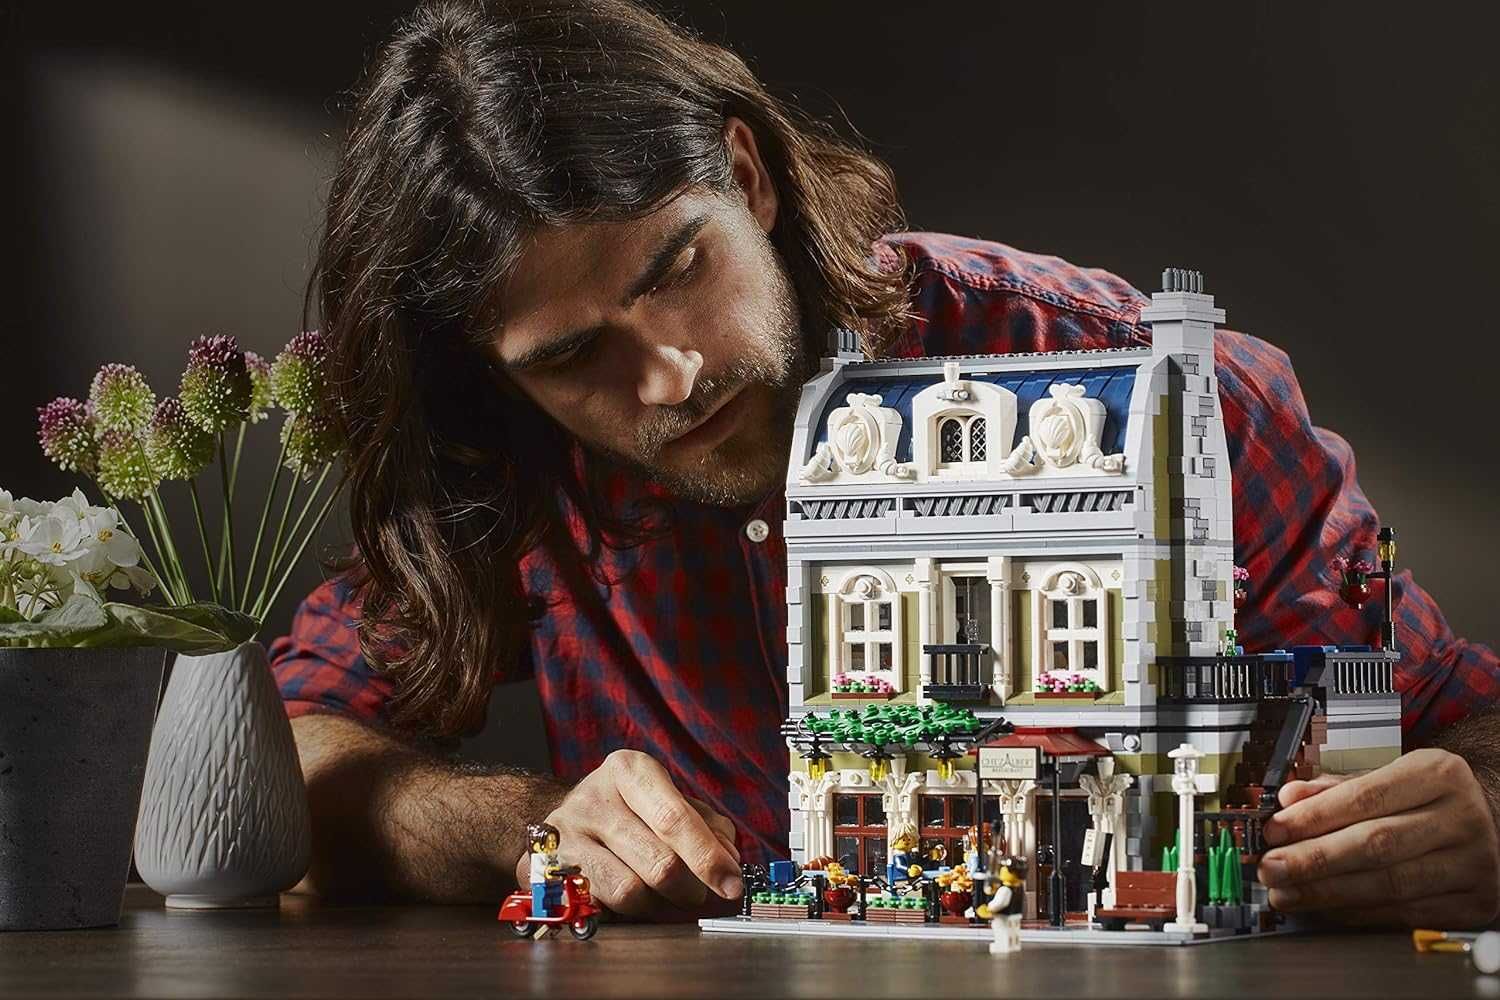 Употребявано LEGO Creator Expert Parisian Restaurant 10243